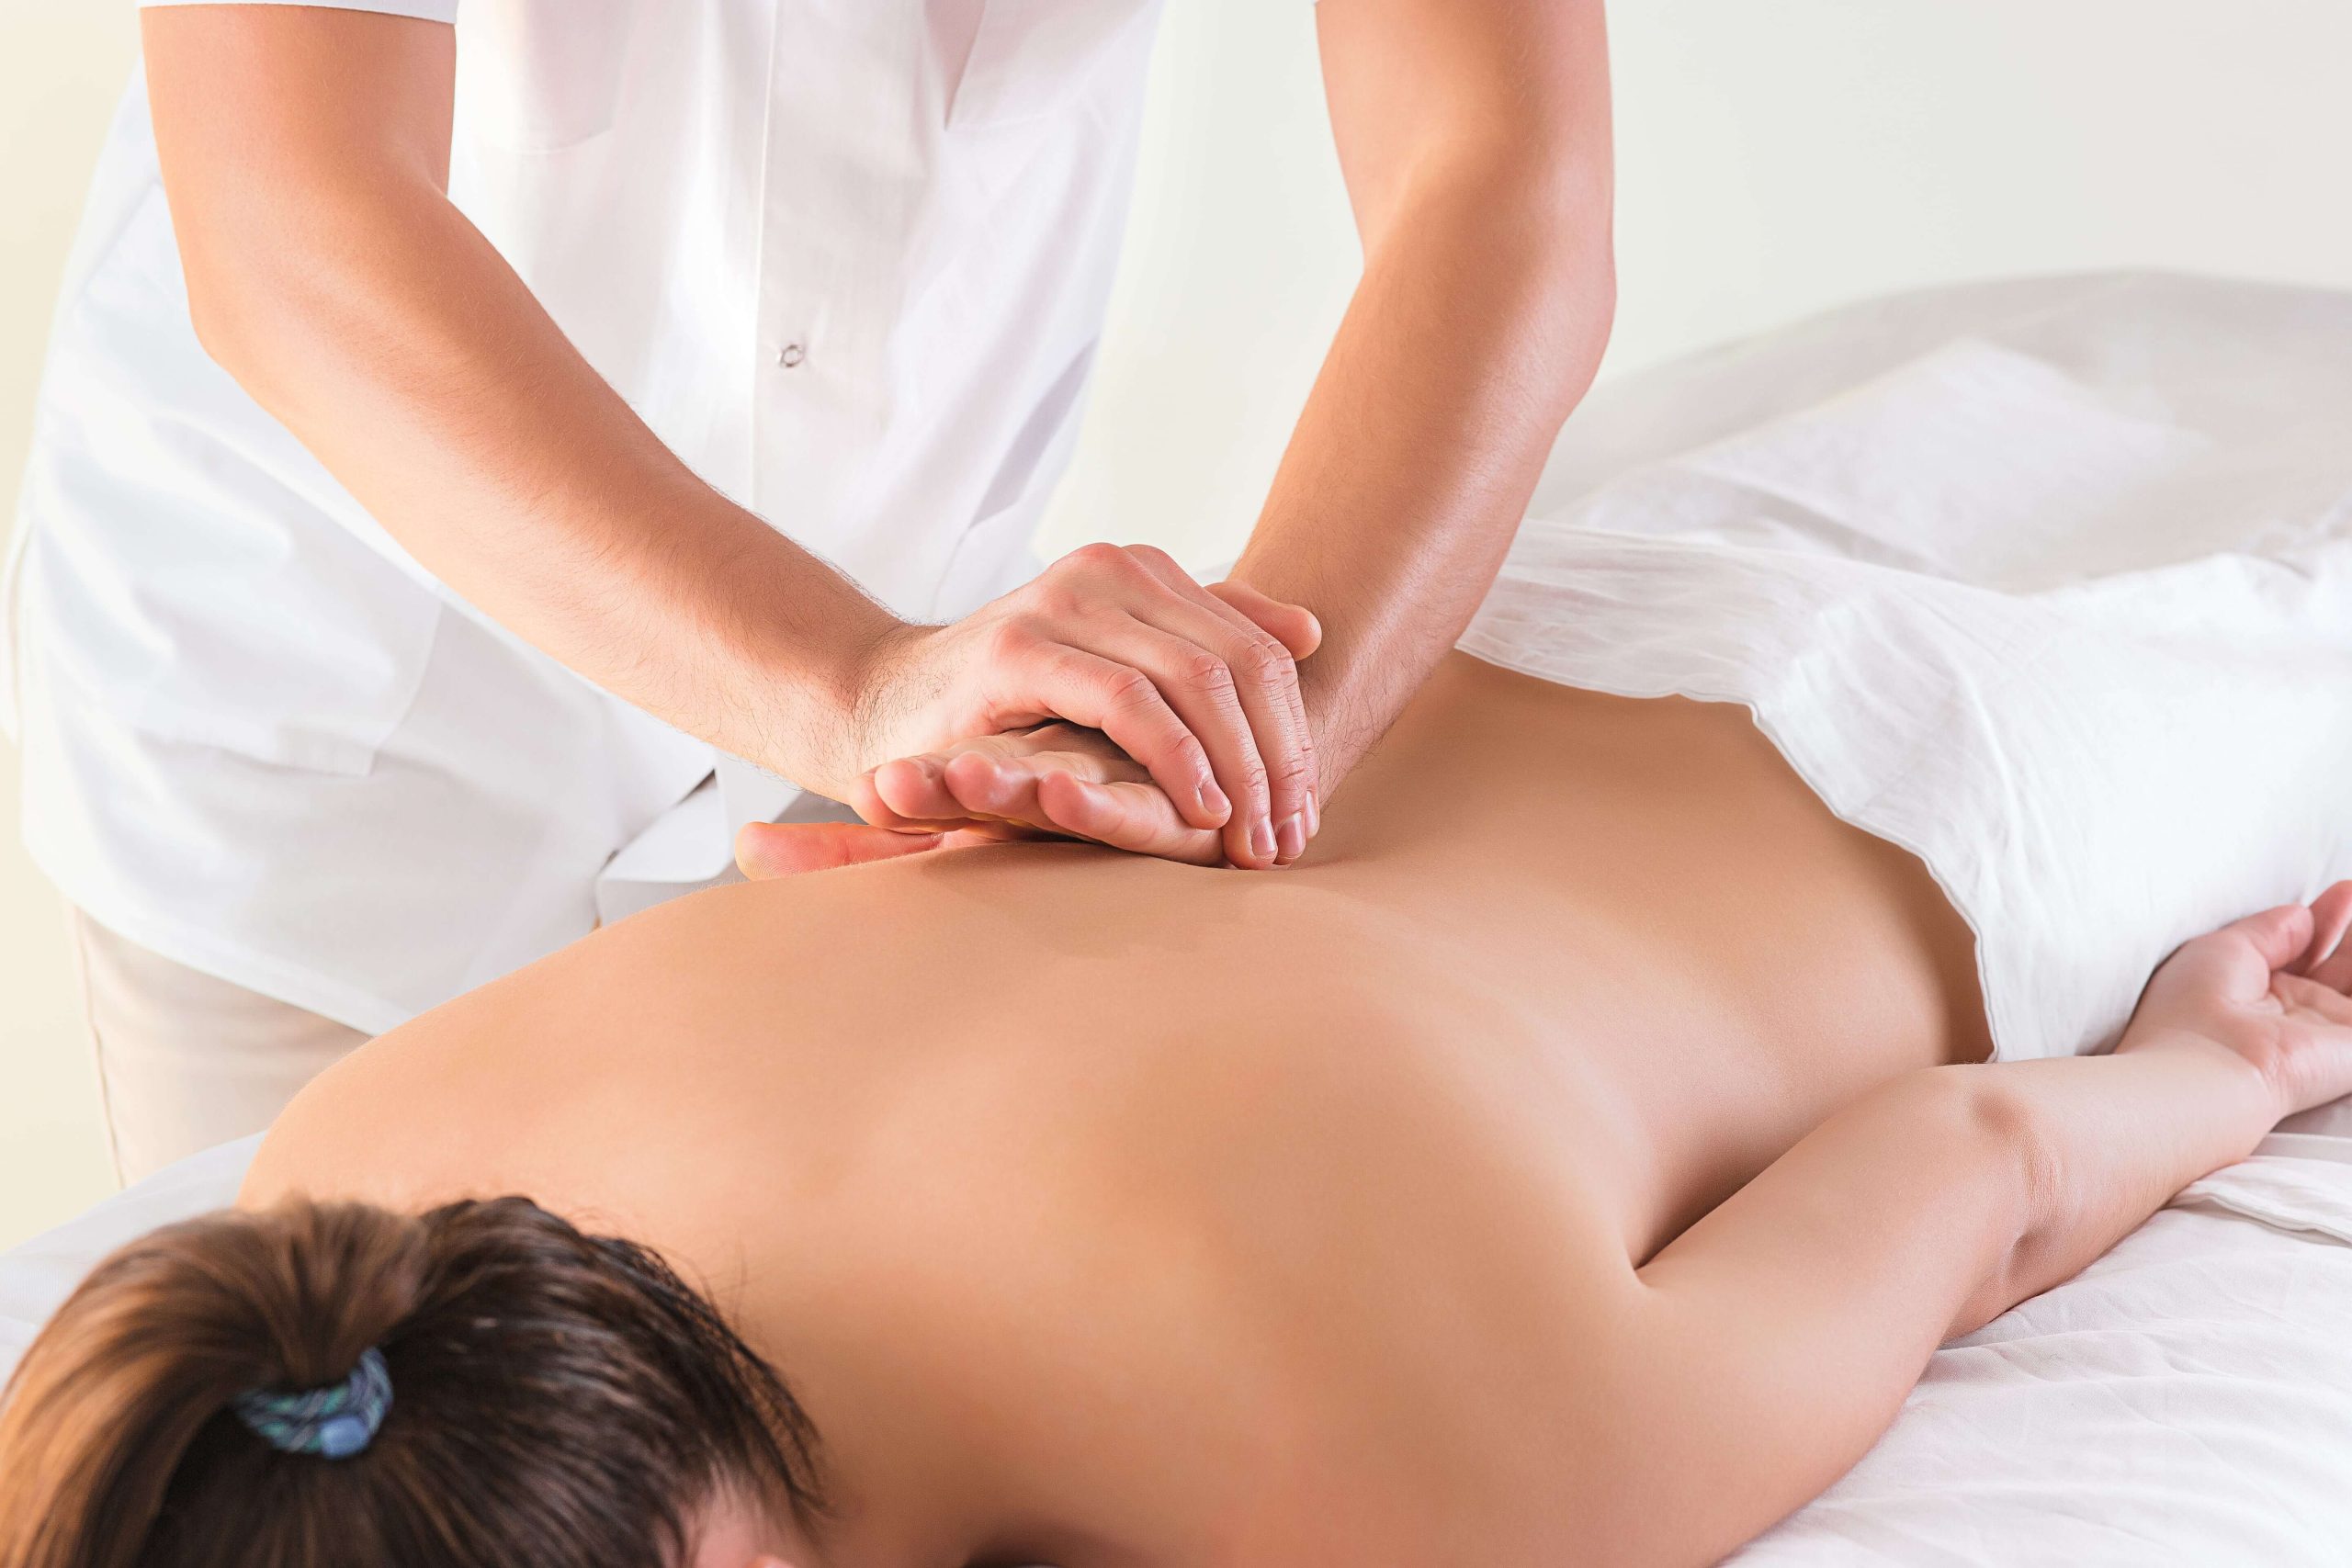 operatore tuinaista massaggio tuina medicina cinese